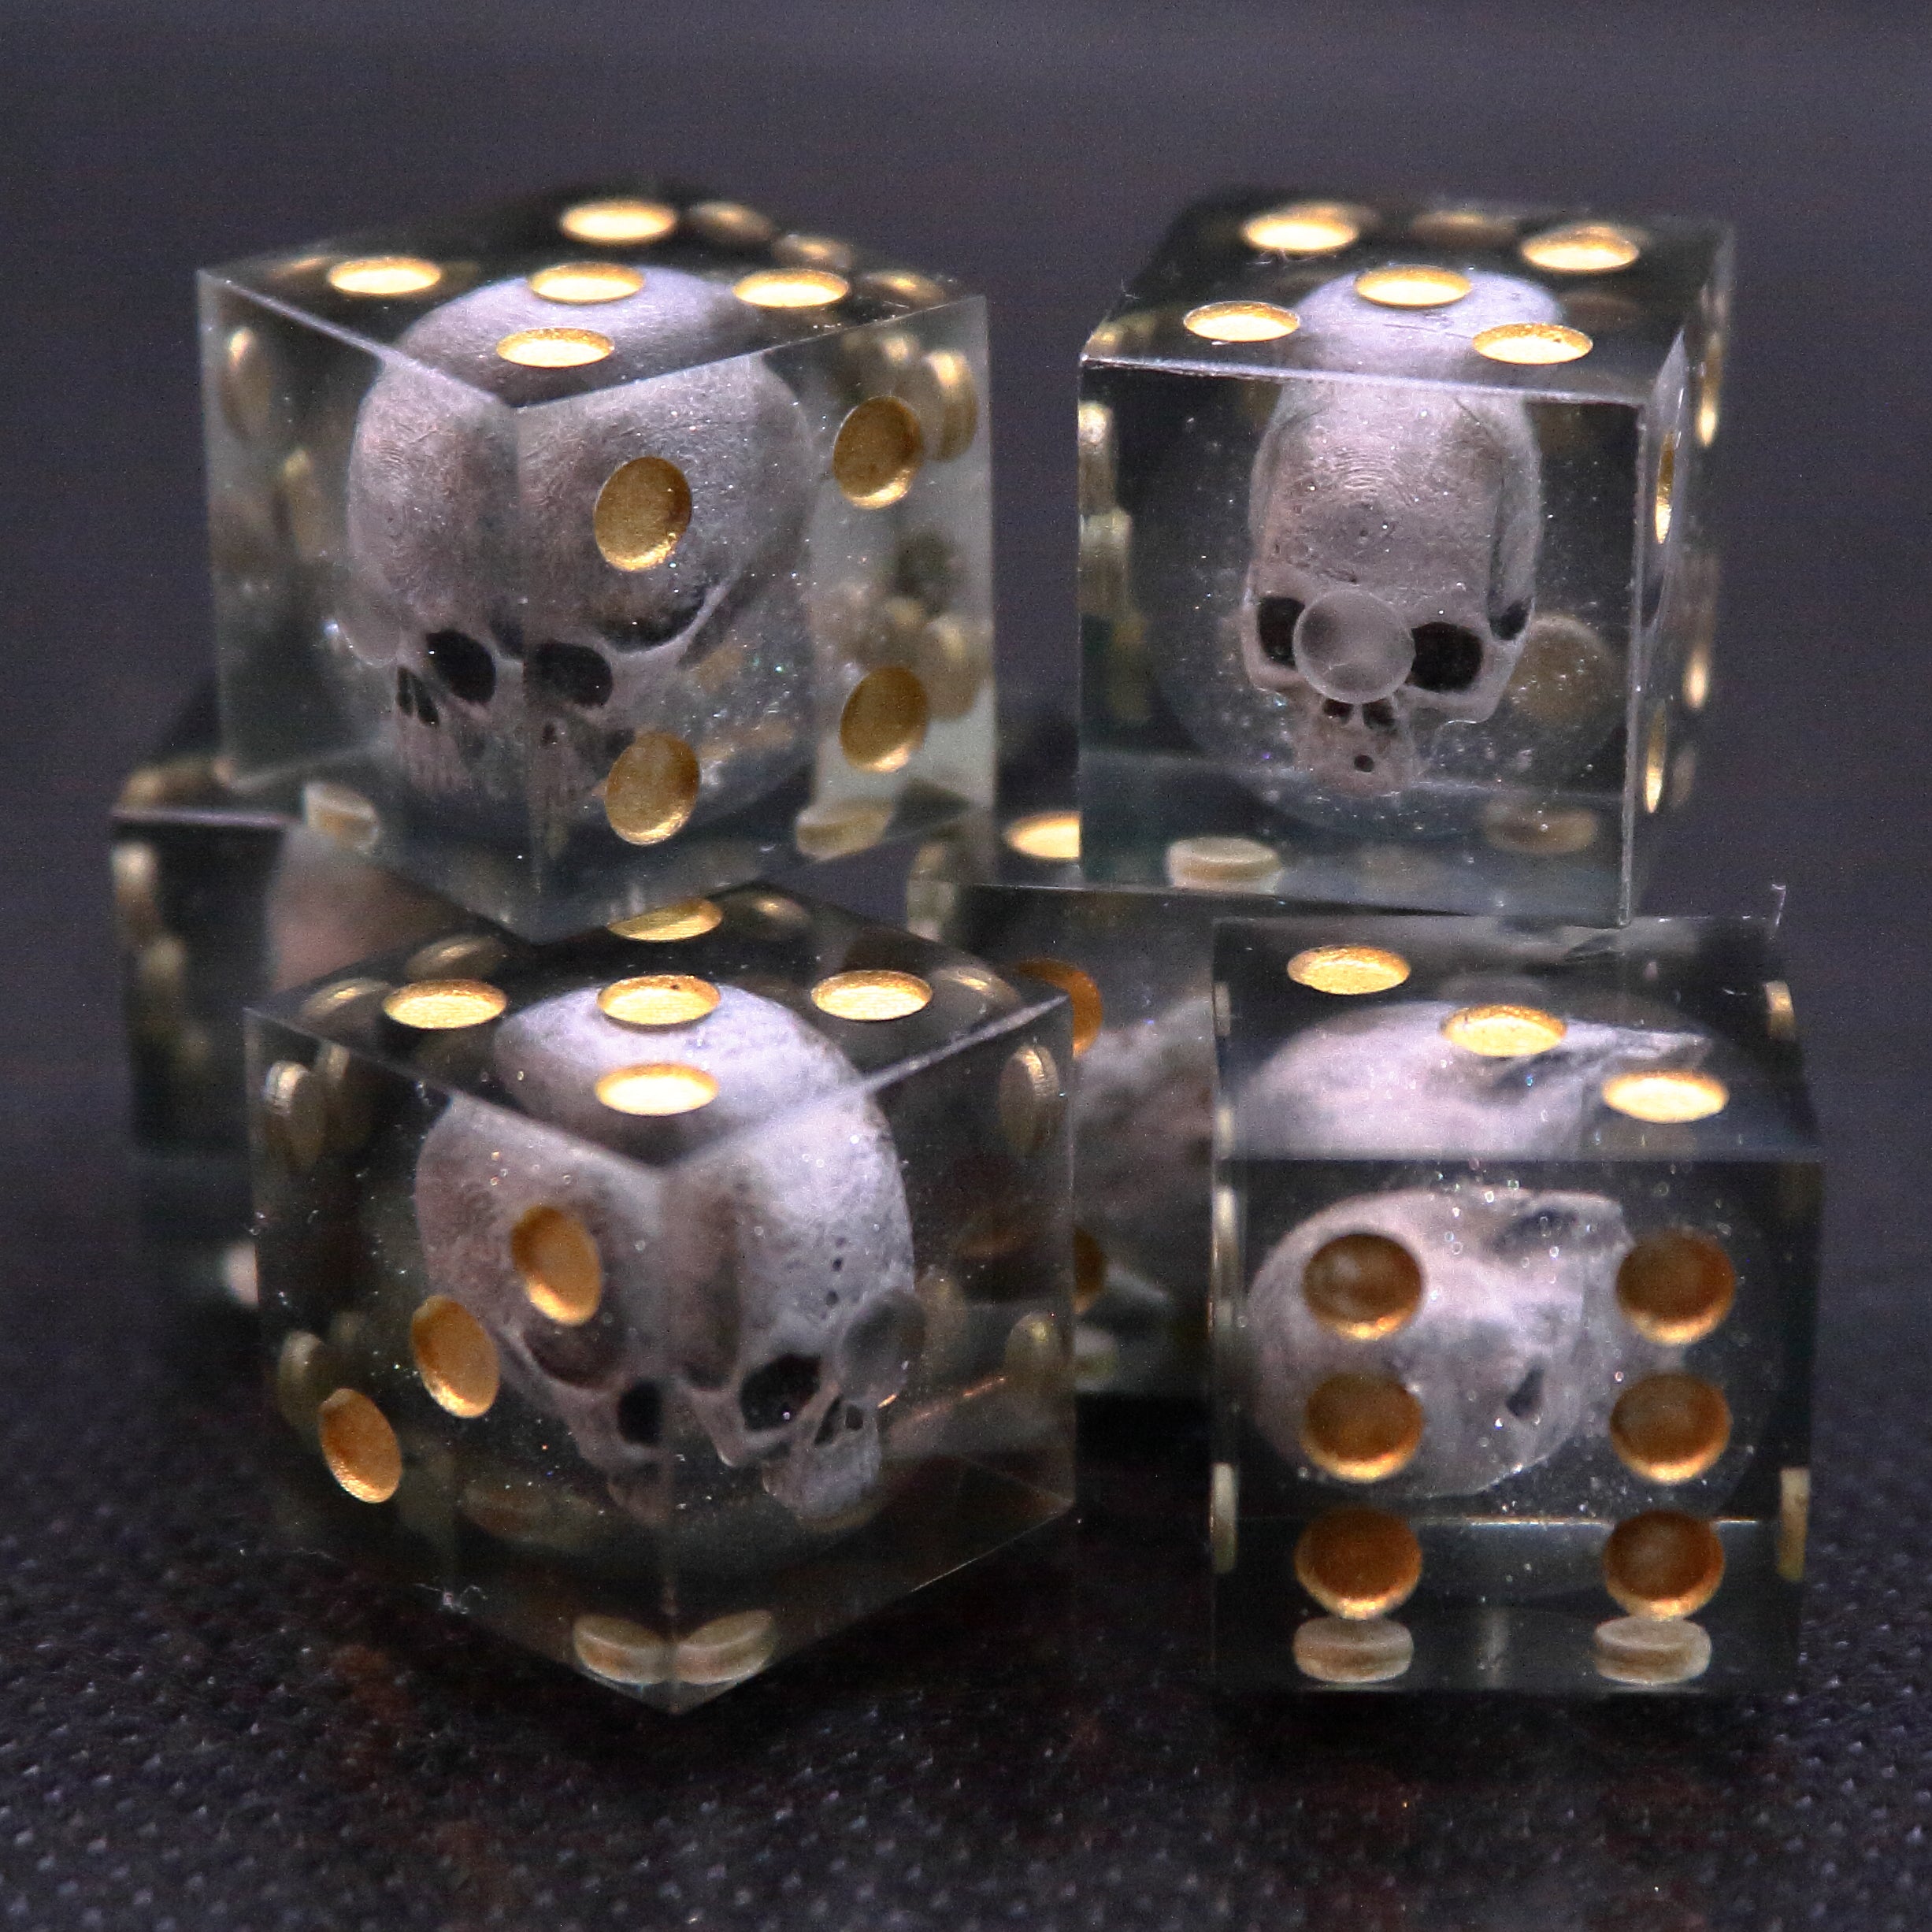 Set of 6 D6 Dice with Skulls inside.